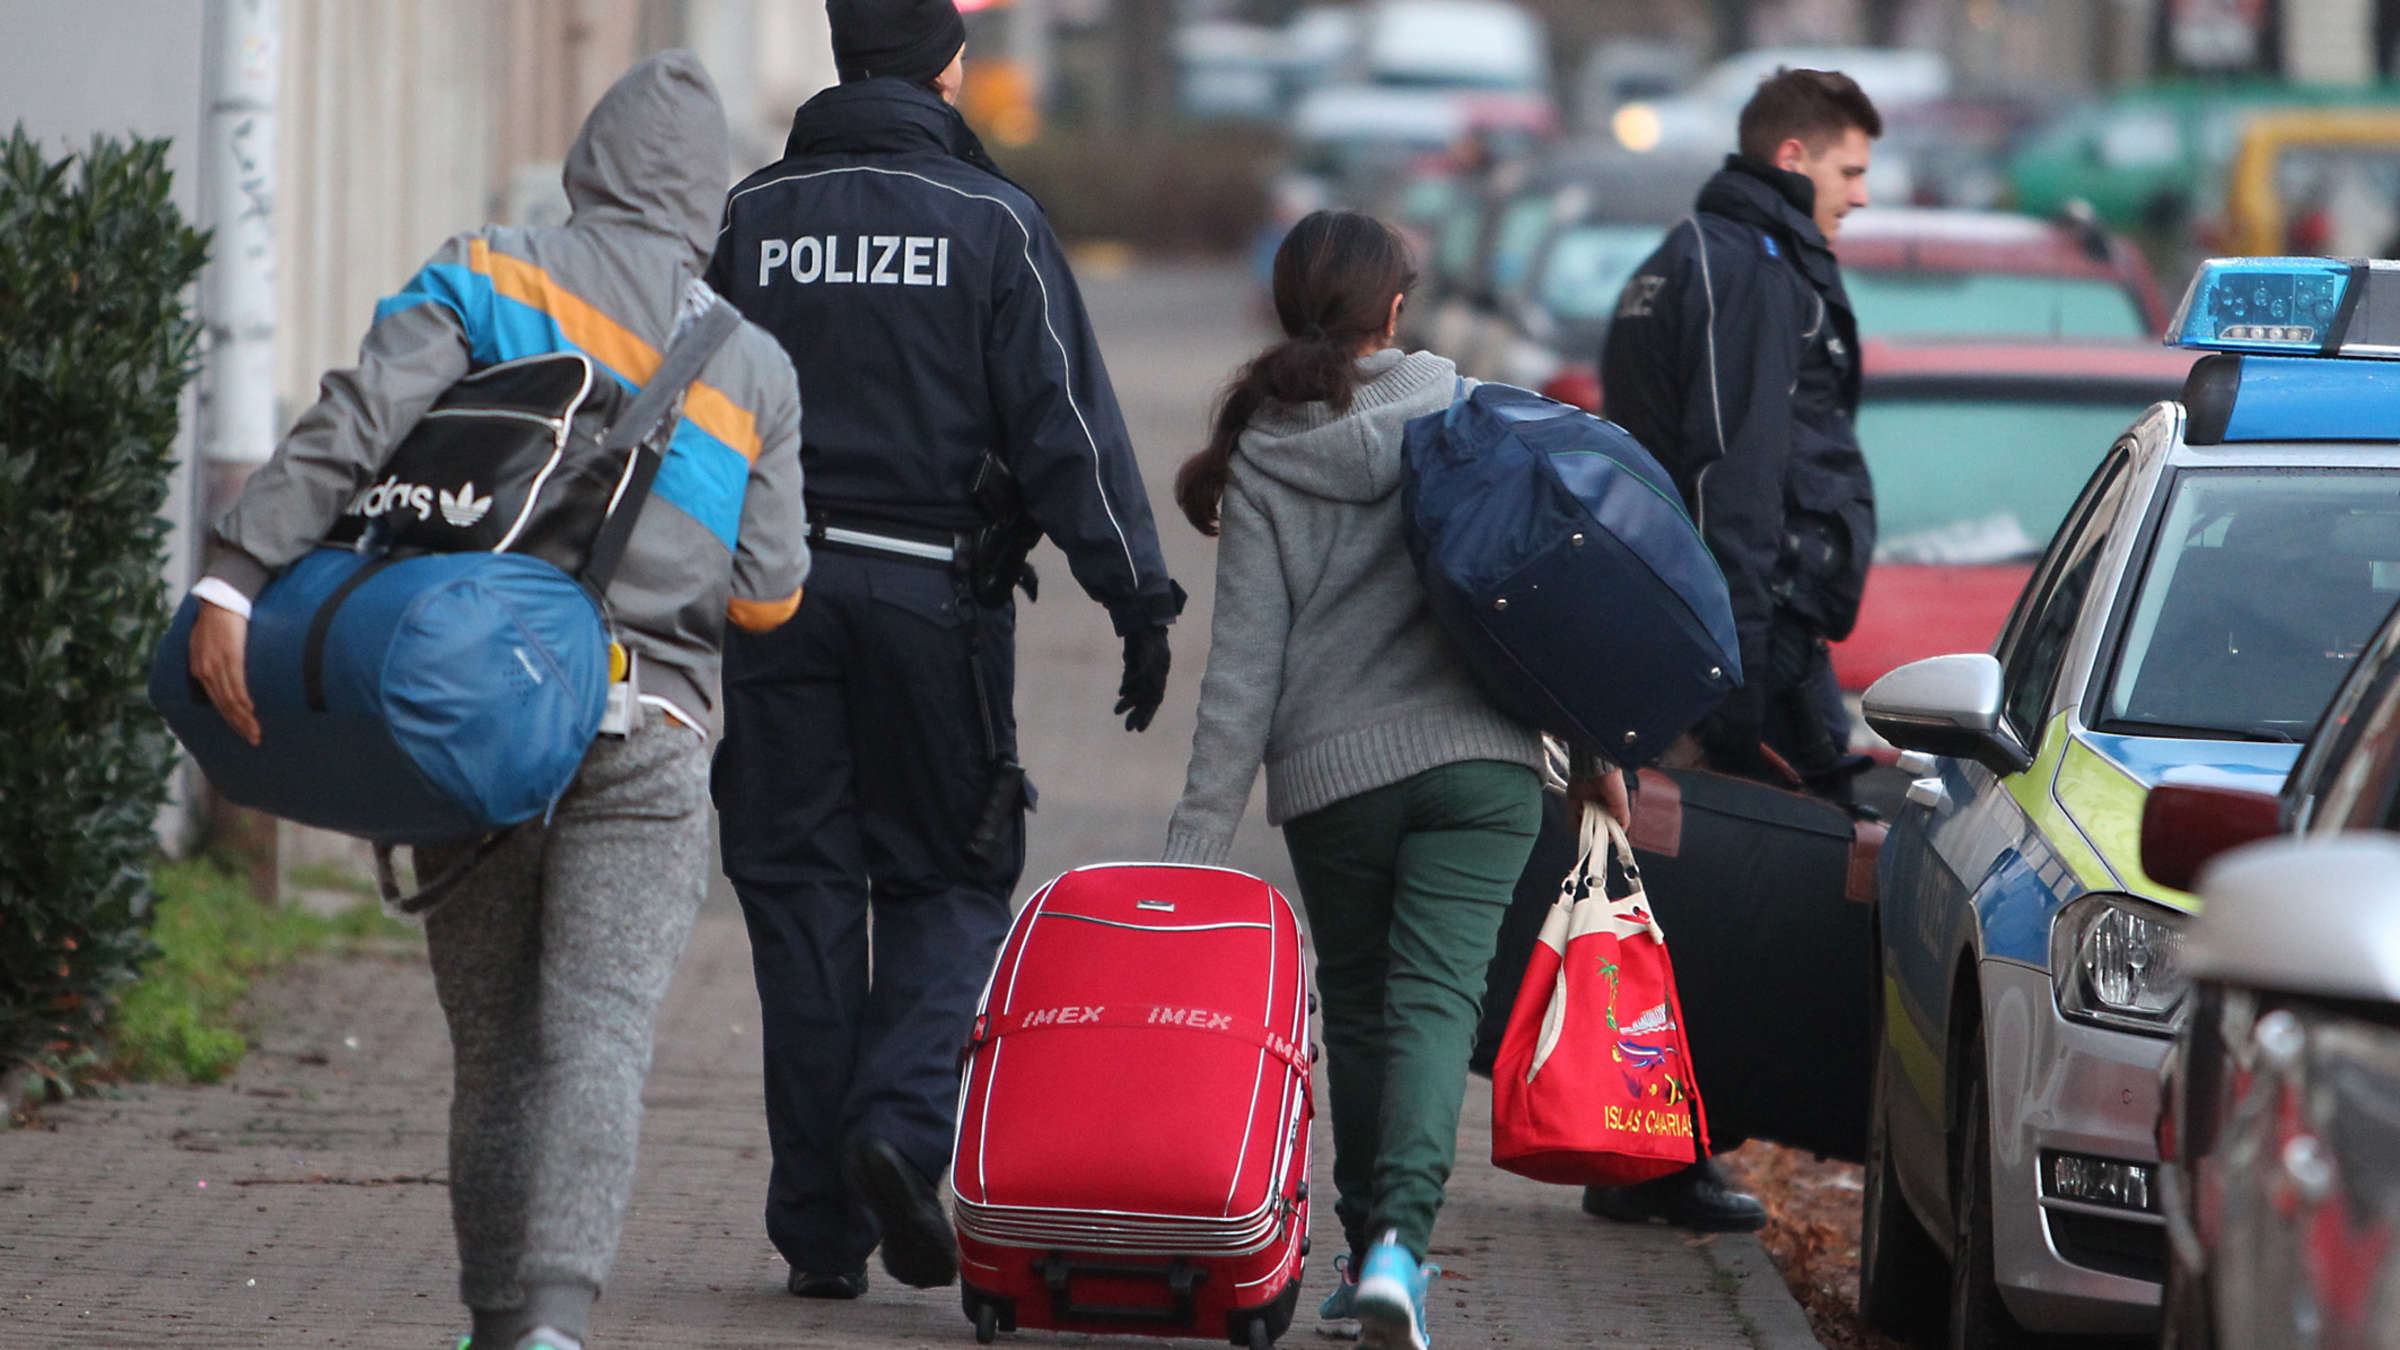 Еще 8 граждан Азербайджана депортируют из Германии